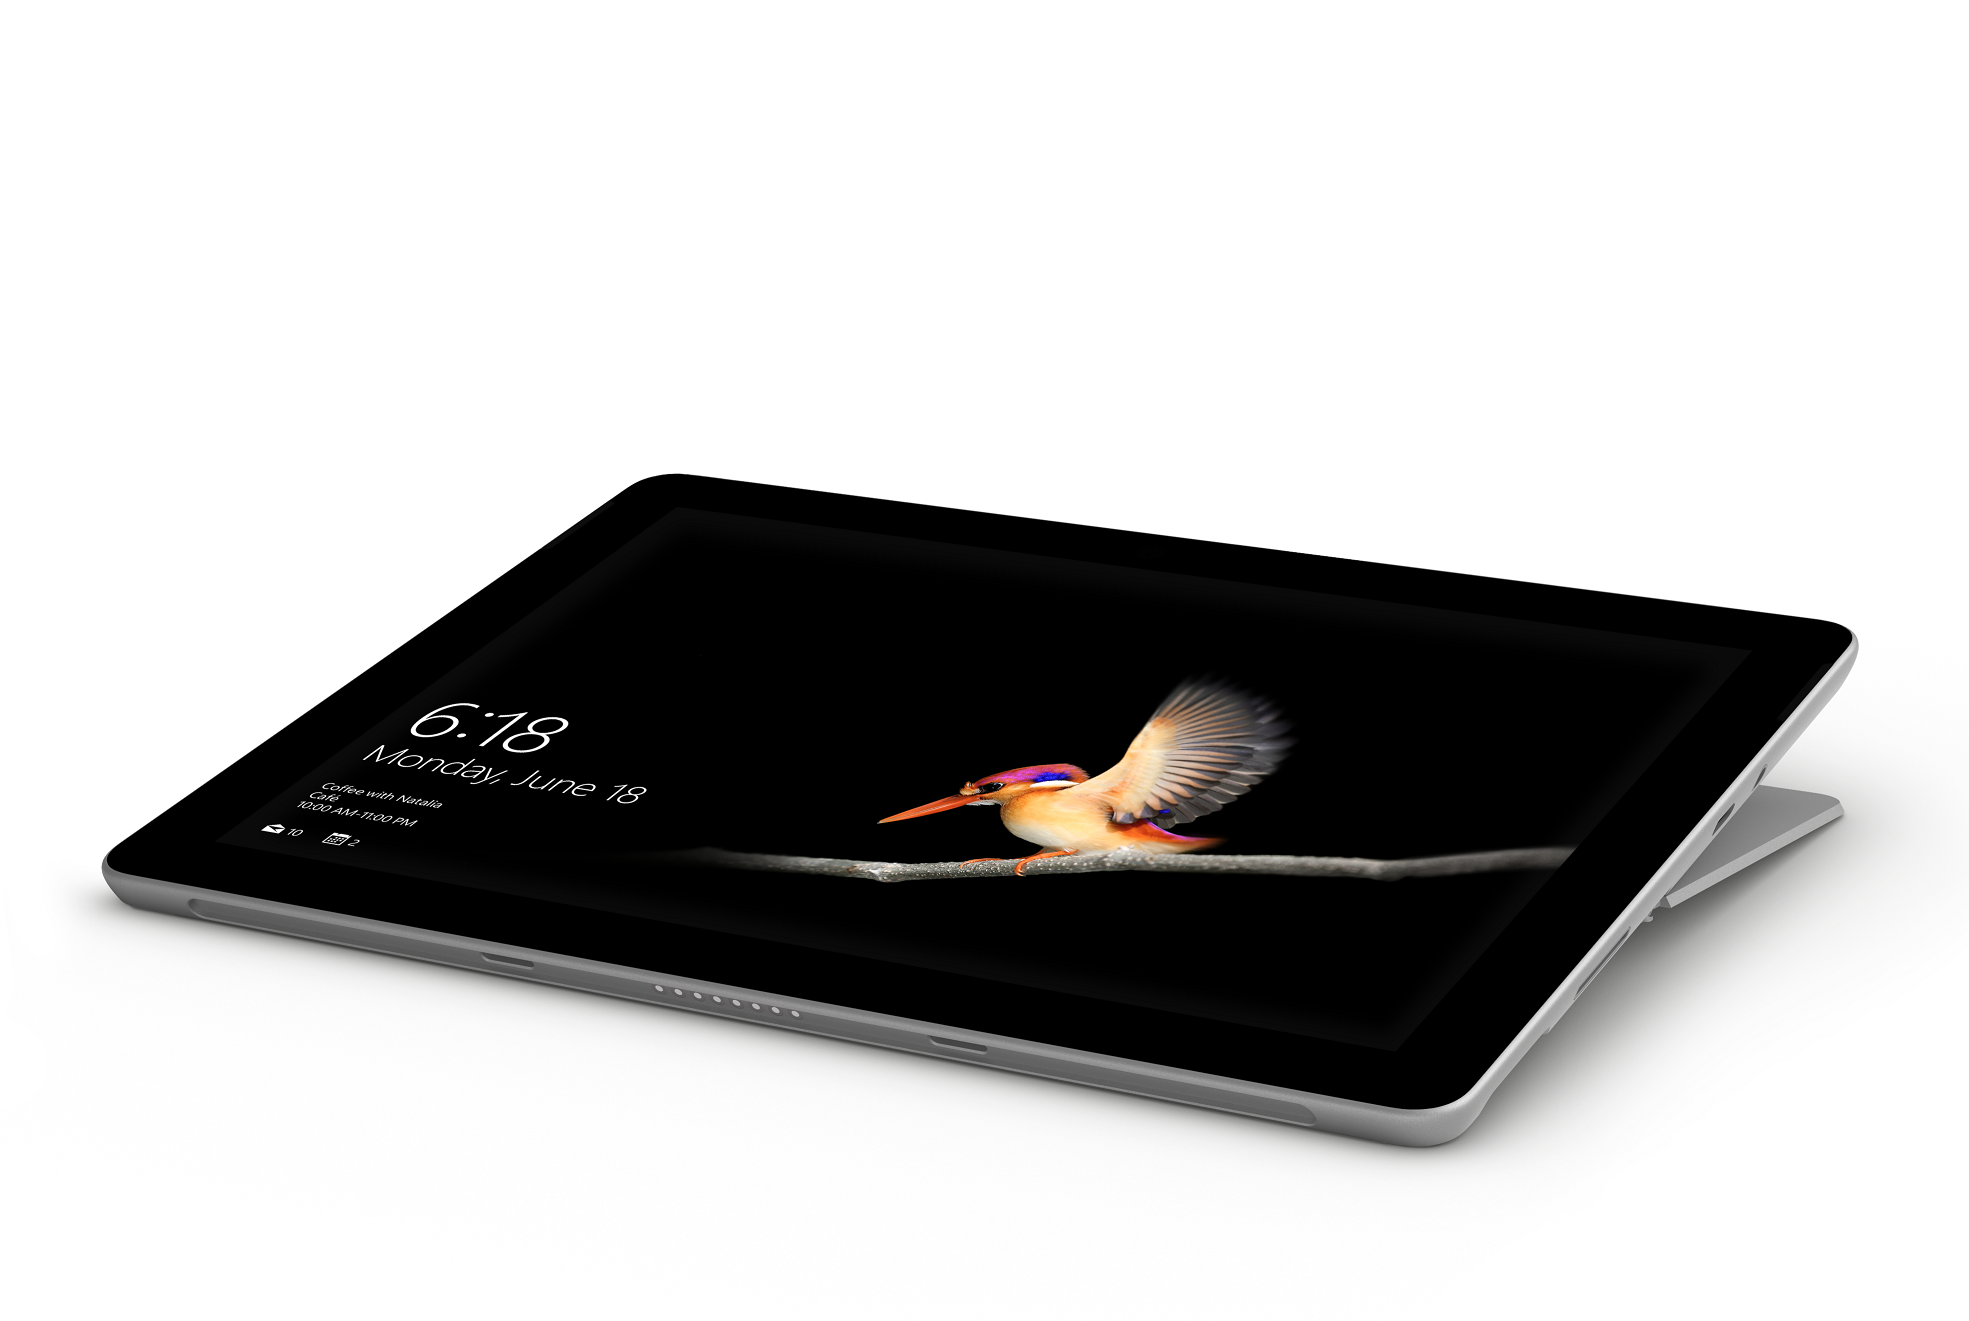 Microsoft Surface Go - Tablet - Intel Pentium Gold - 4415Y / 1.6 